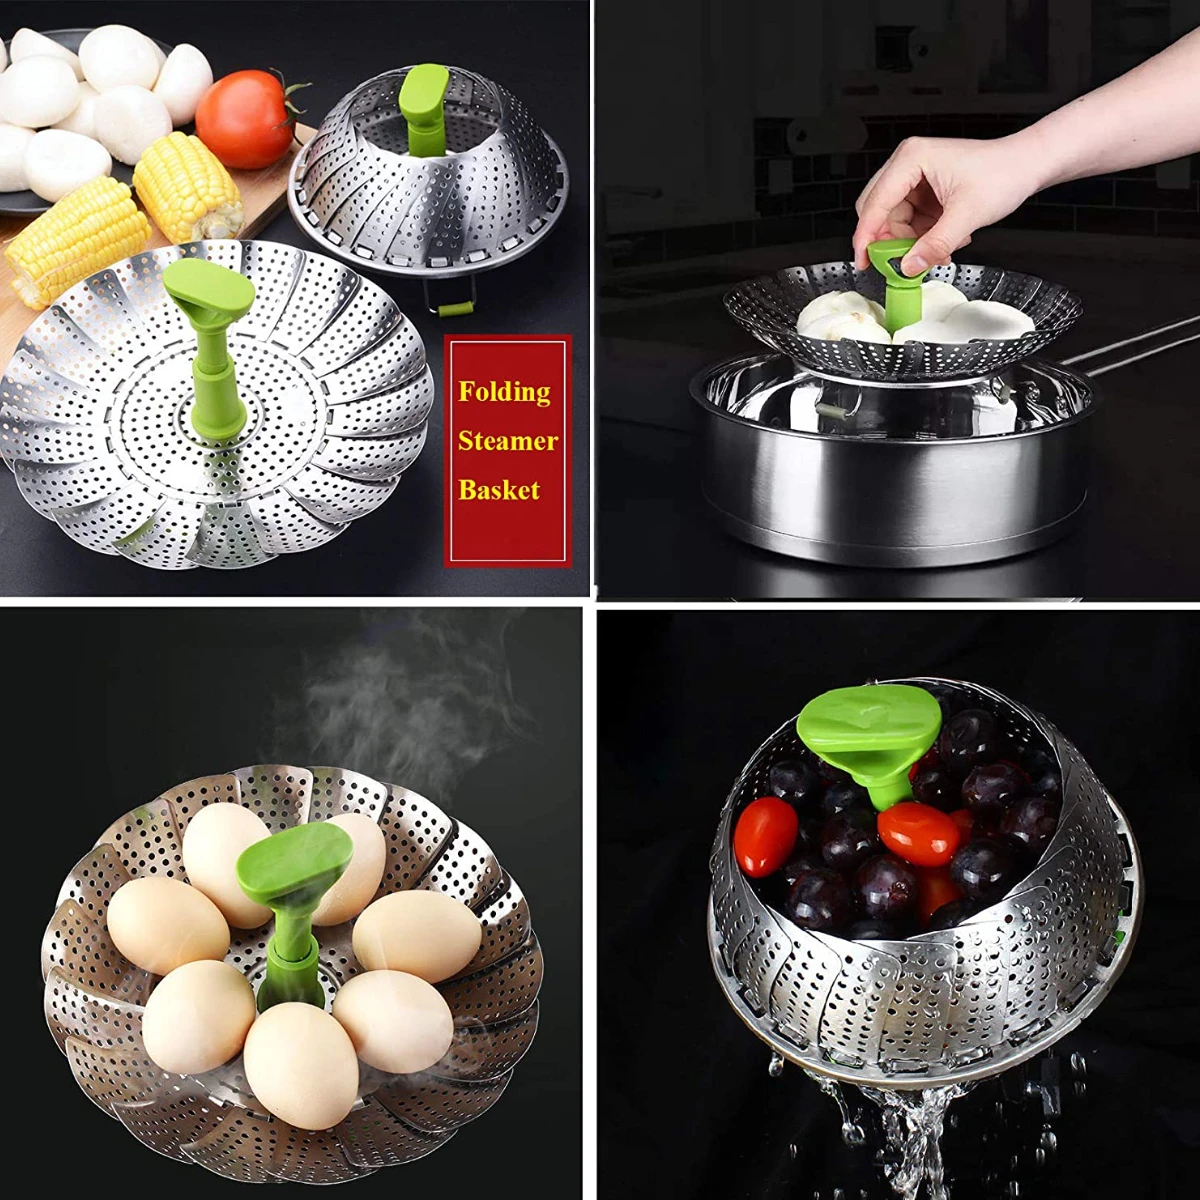 https://ae01.alicdn.com/kf/S0eb790ec867646639d560caeaddbab66U/Vegetable-Steamer-Basket-for-Cooking-Stainless-Steel-Baby-Food-Steamer-Folding-Pasta-Pot-with-Strainer-Insert.jpg